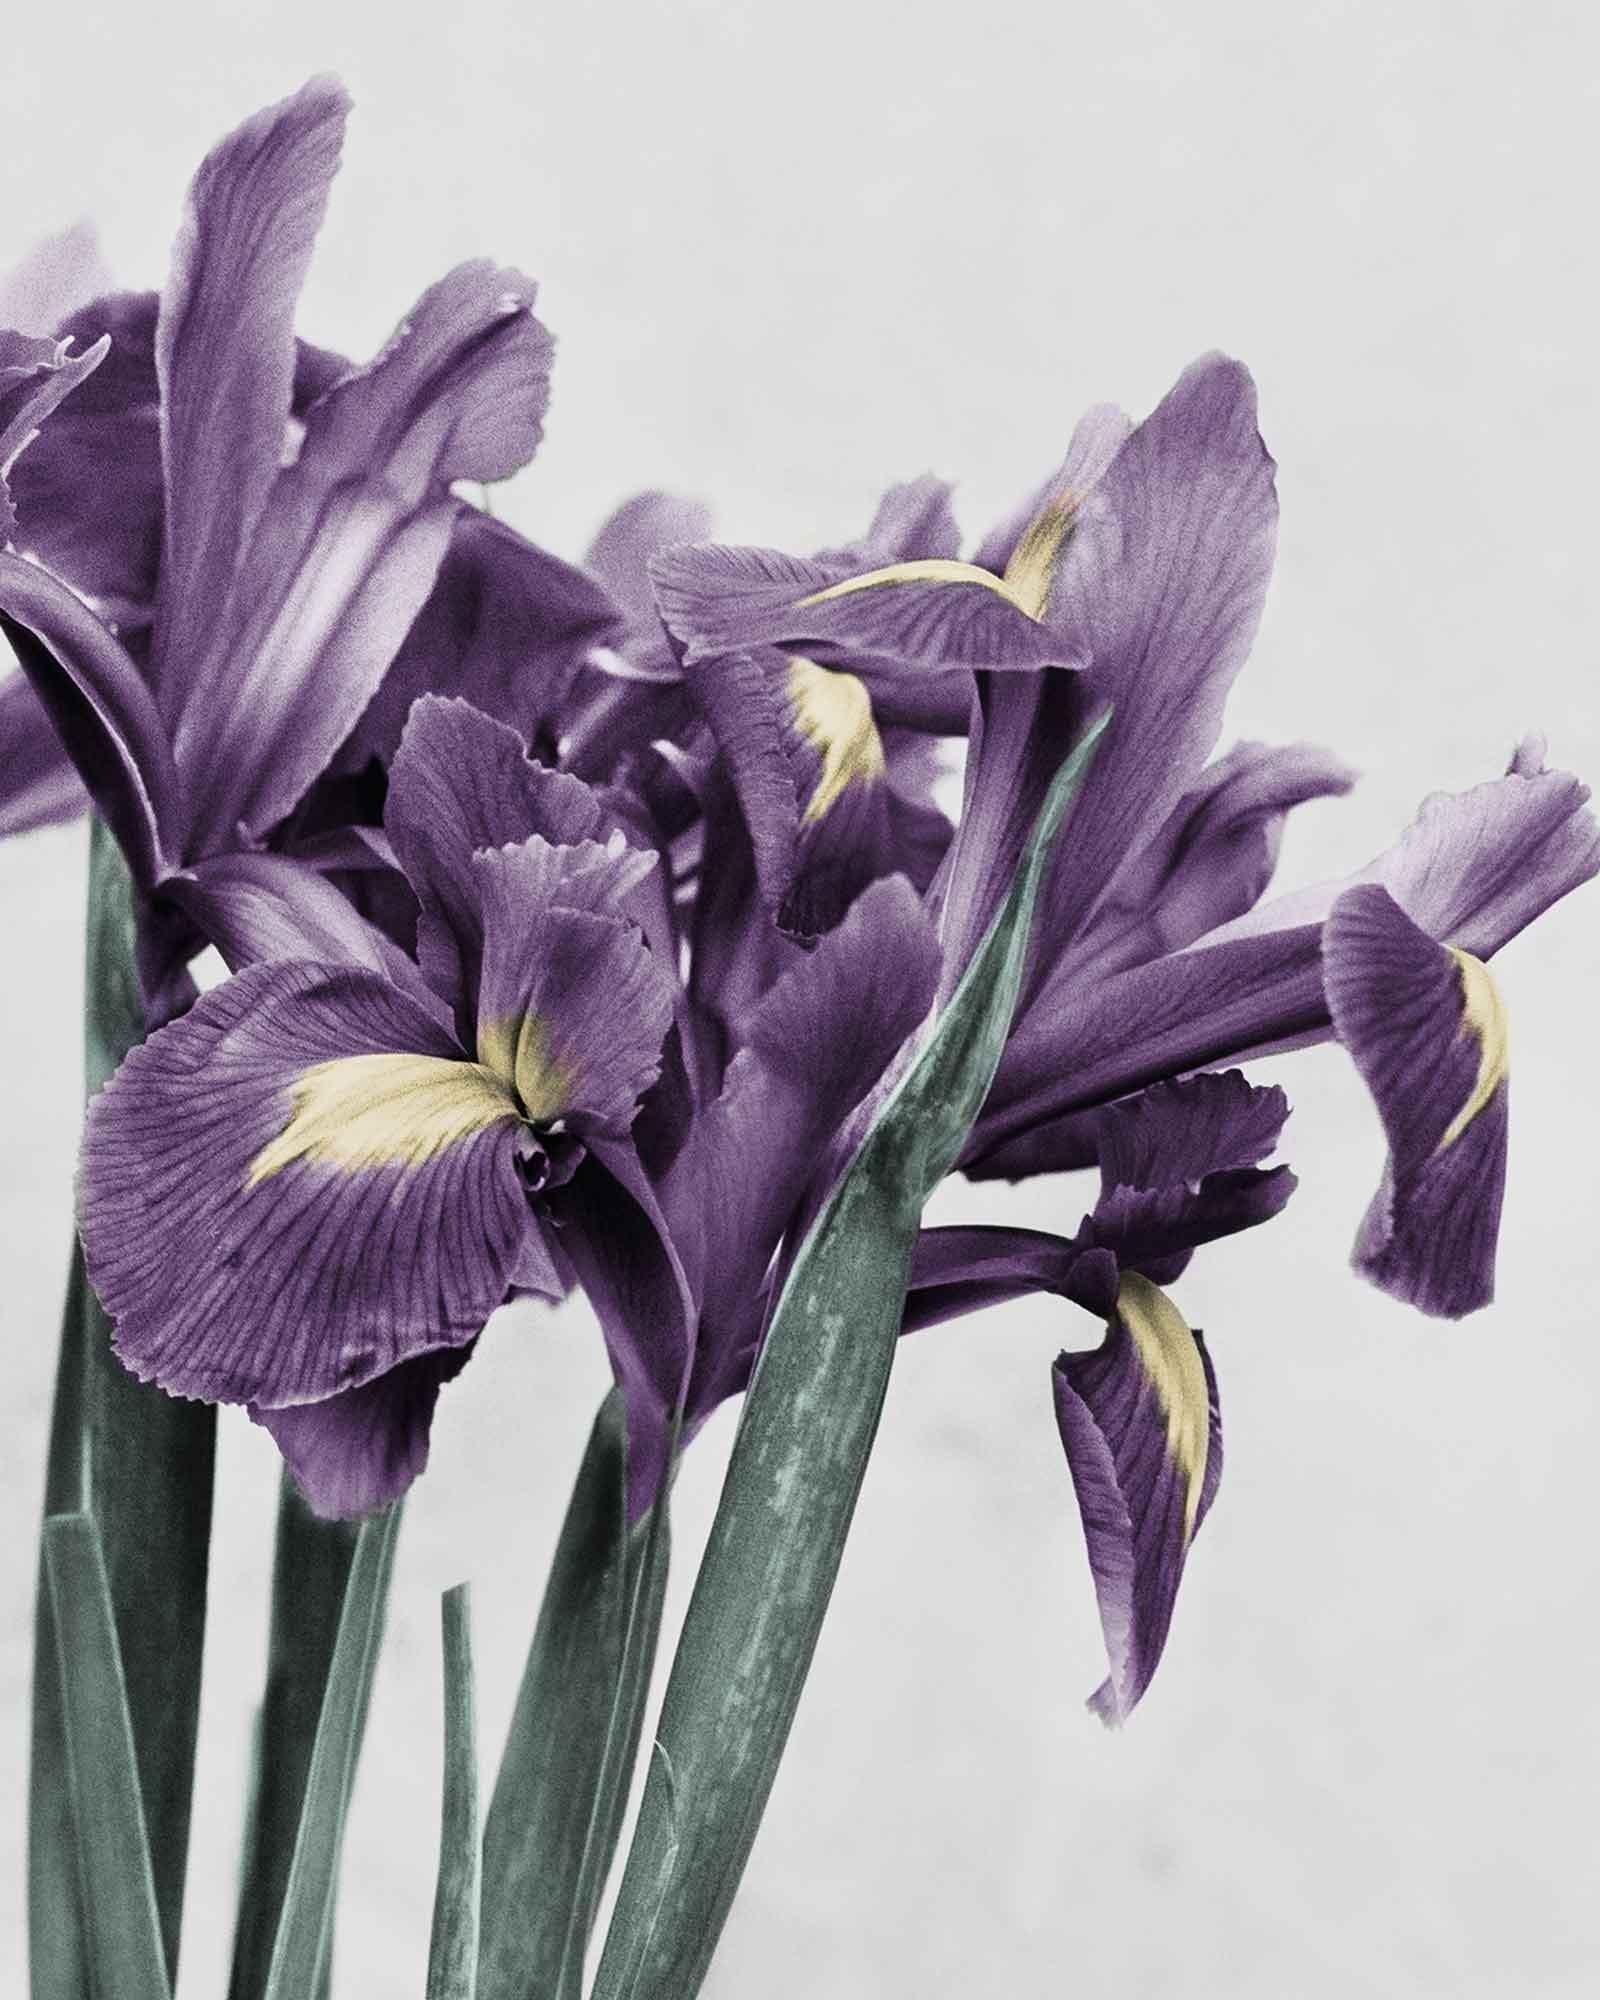 Botanica #21 (Iris Germanica) - Contemporary Photograph by Vee Speers